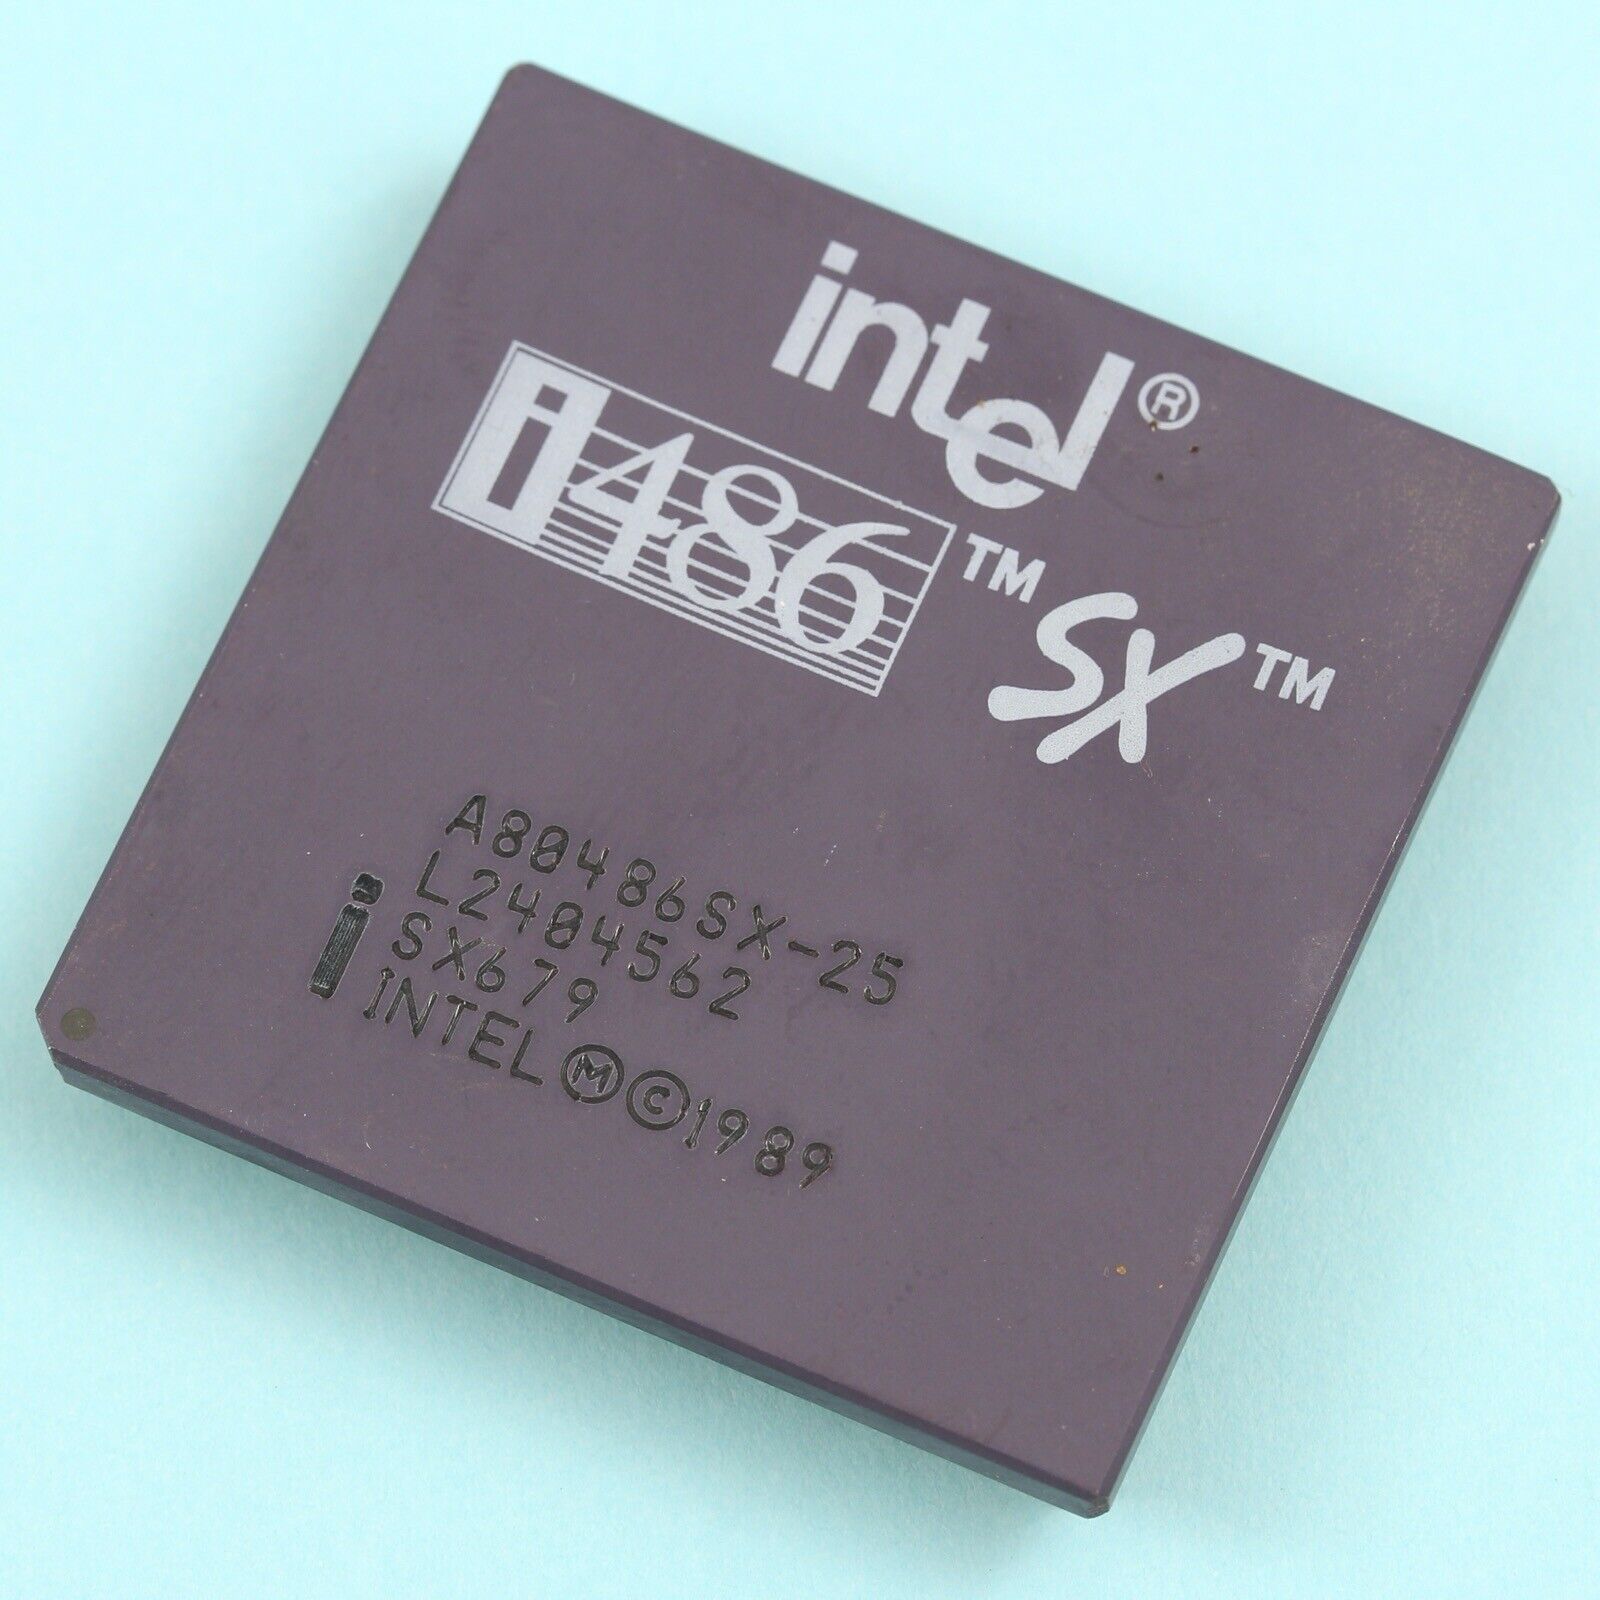 Intel 486 SX 25Mhz CPU Processor SX679 486SX-25 PGA 168 Socket 1-3 Ceramic Gold